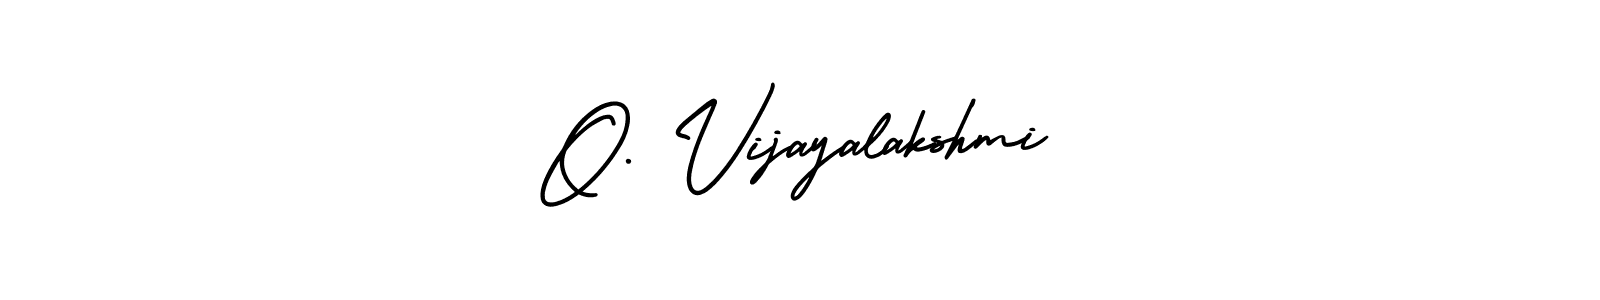 Design your own signature with our free online signature maker. With this signature software, you can create a handwritten (AmerikaSignatureDemo-Regular) signature for name O. Vijayalakshmi. O. Vijayalakshmi signature style 3 images and pictures png